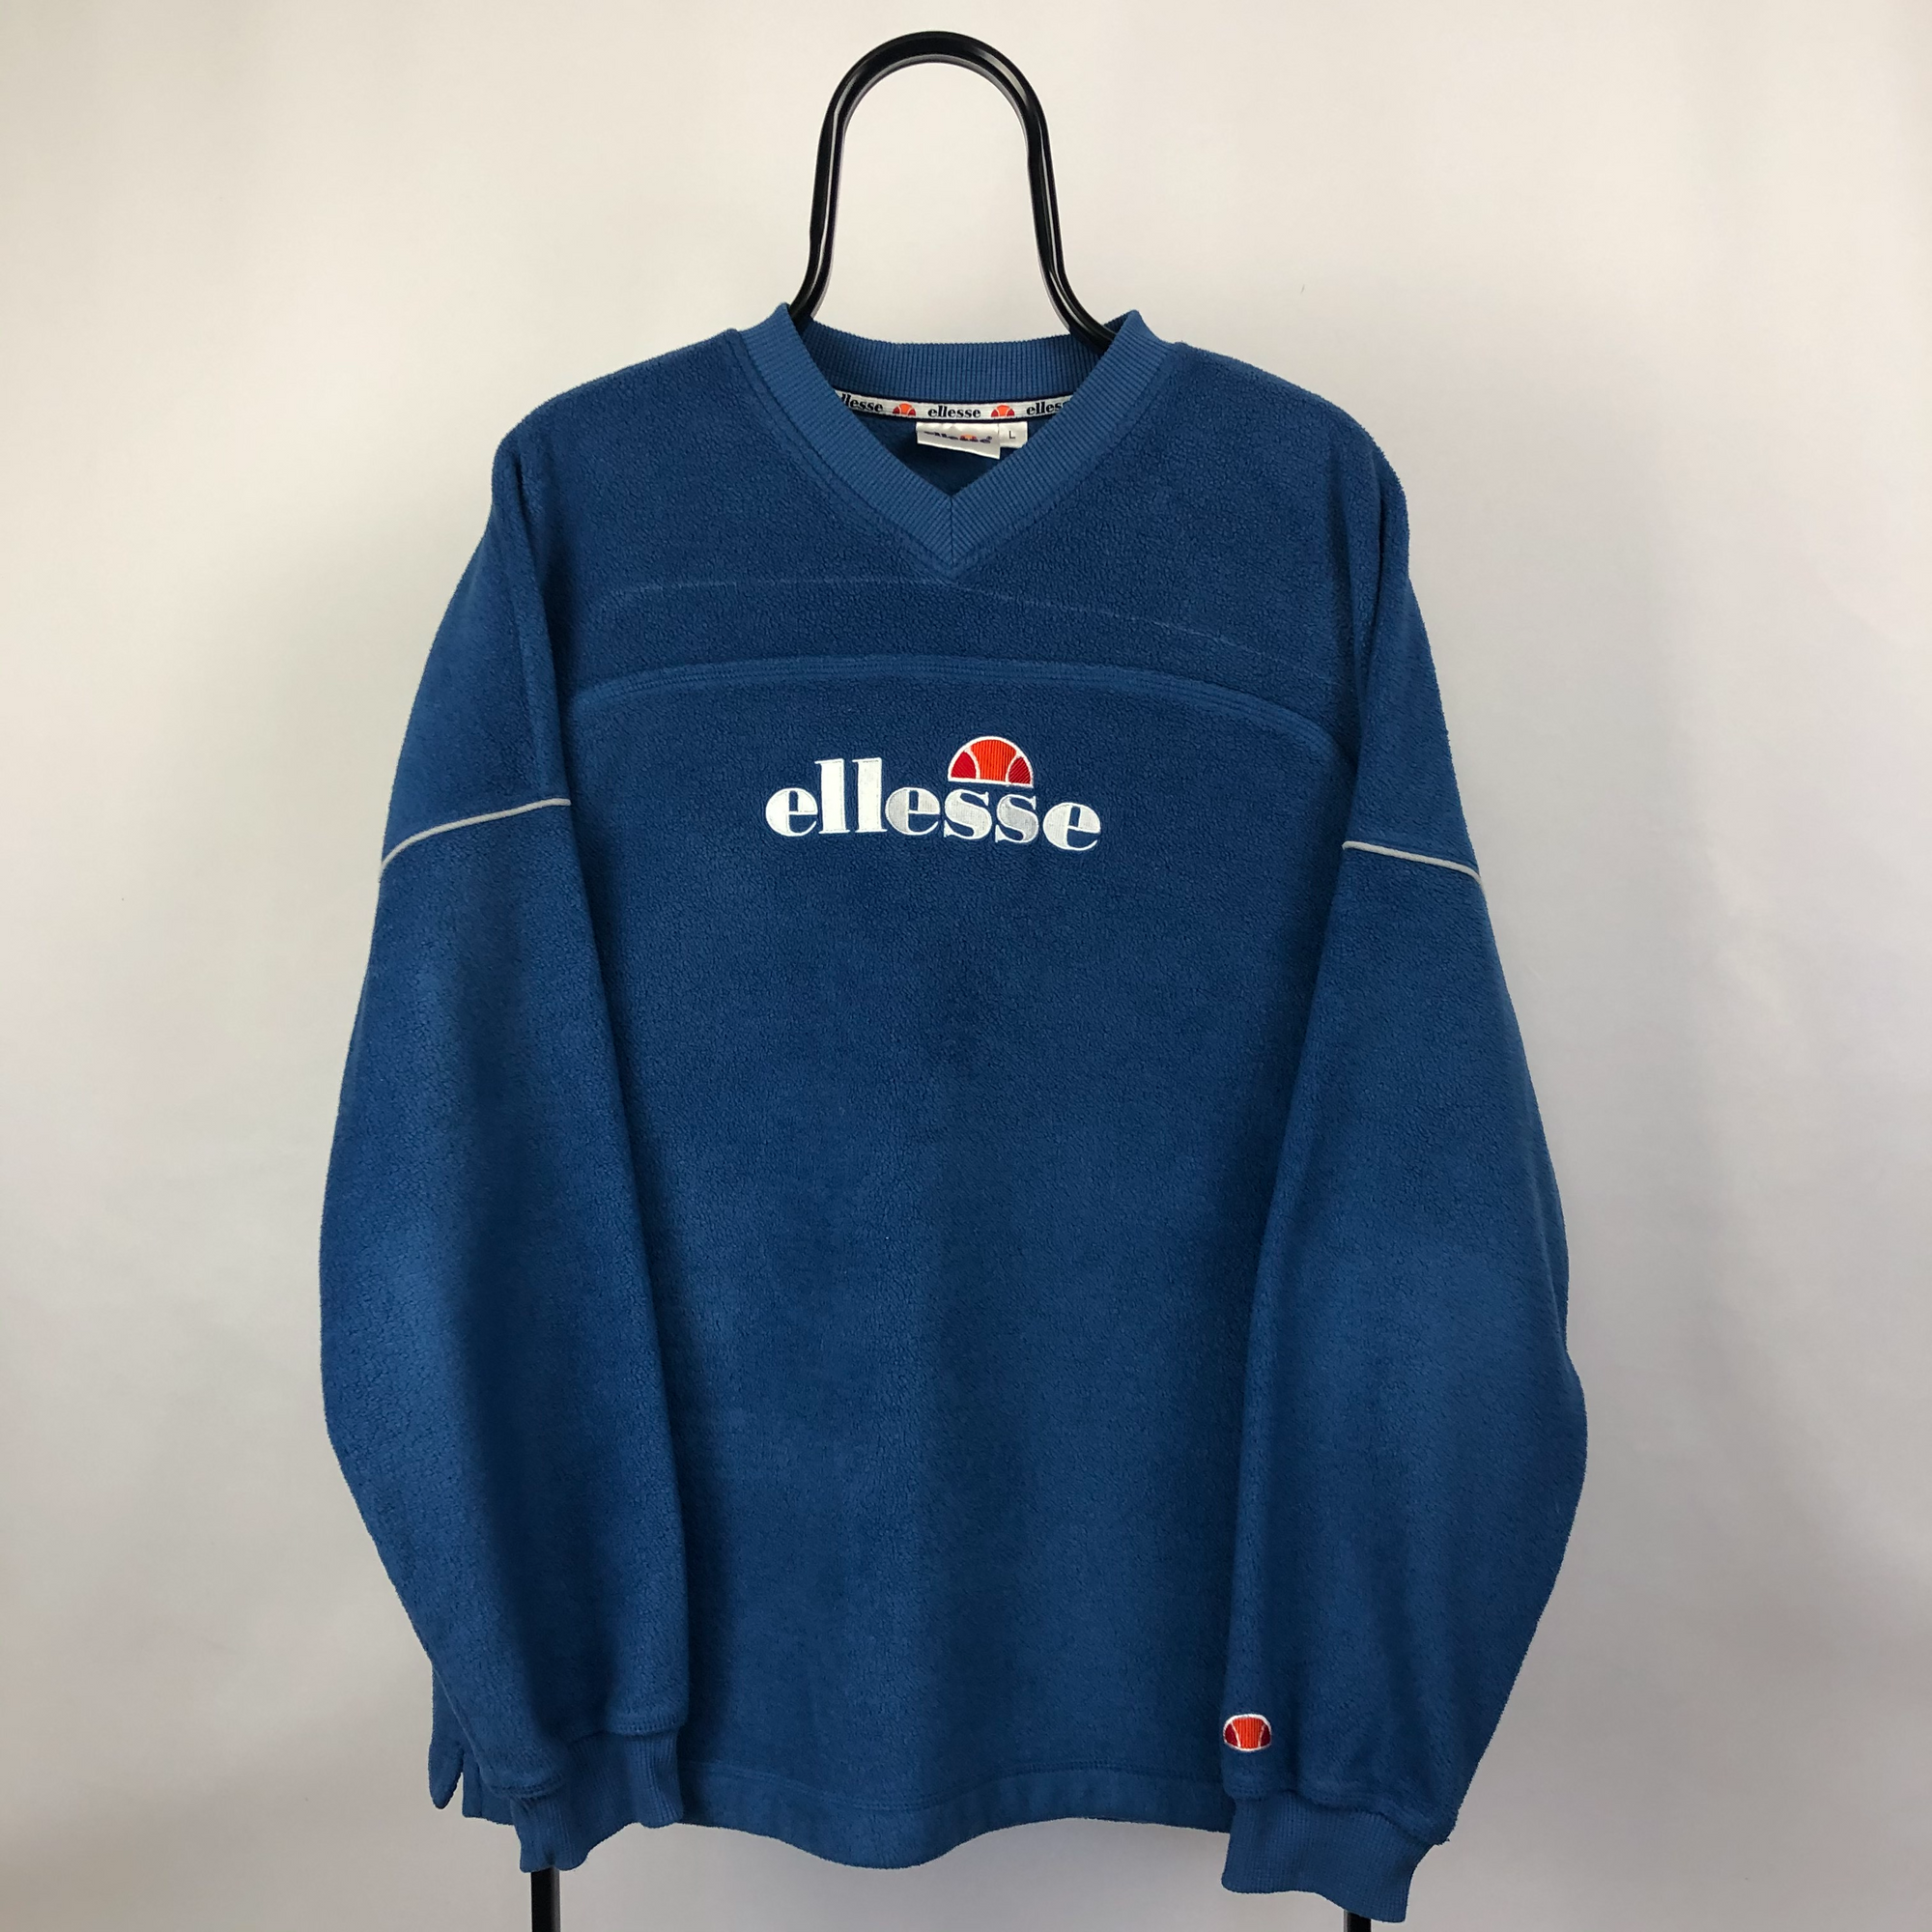 Vintage Ellesse Fleece Sweatshirt - Men's Large/Women's XL